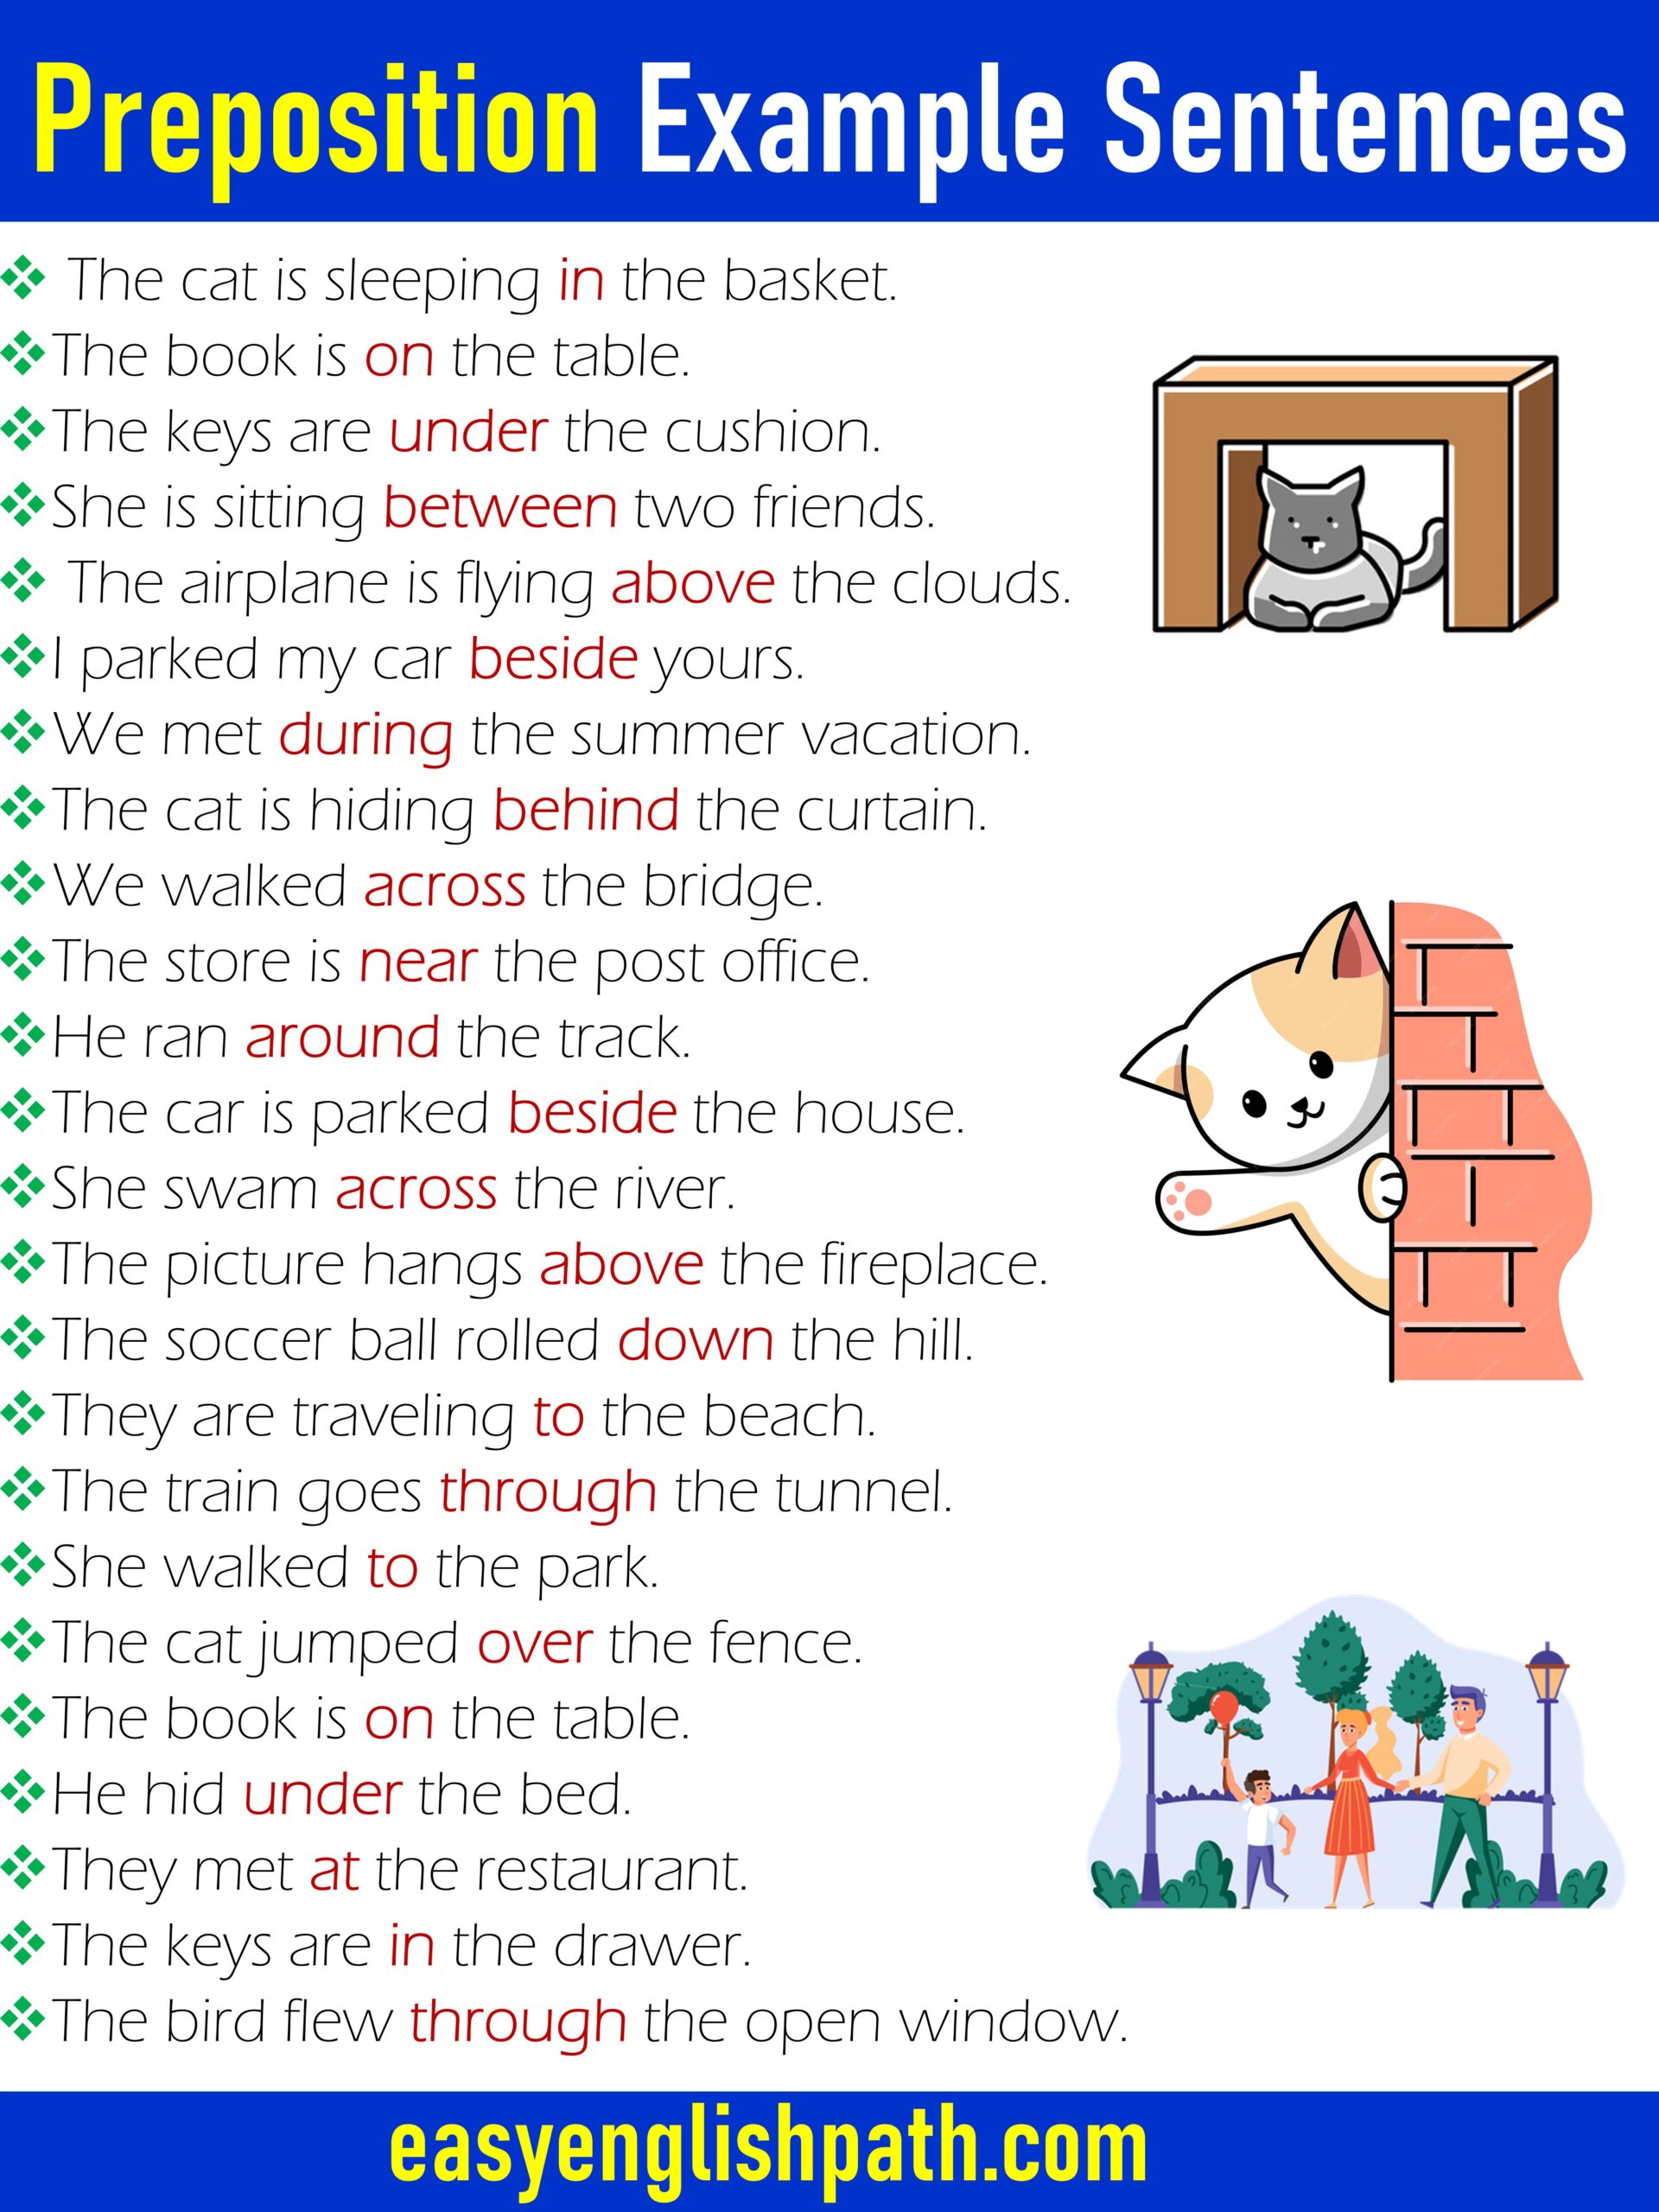 Preposition Example Sentences in English